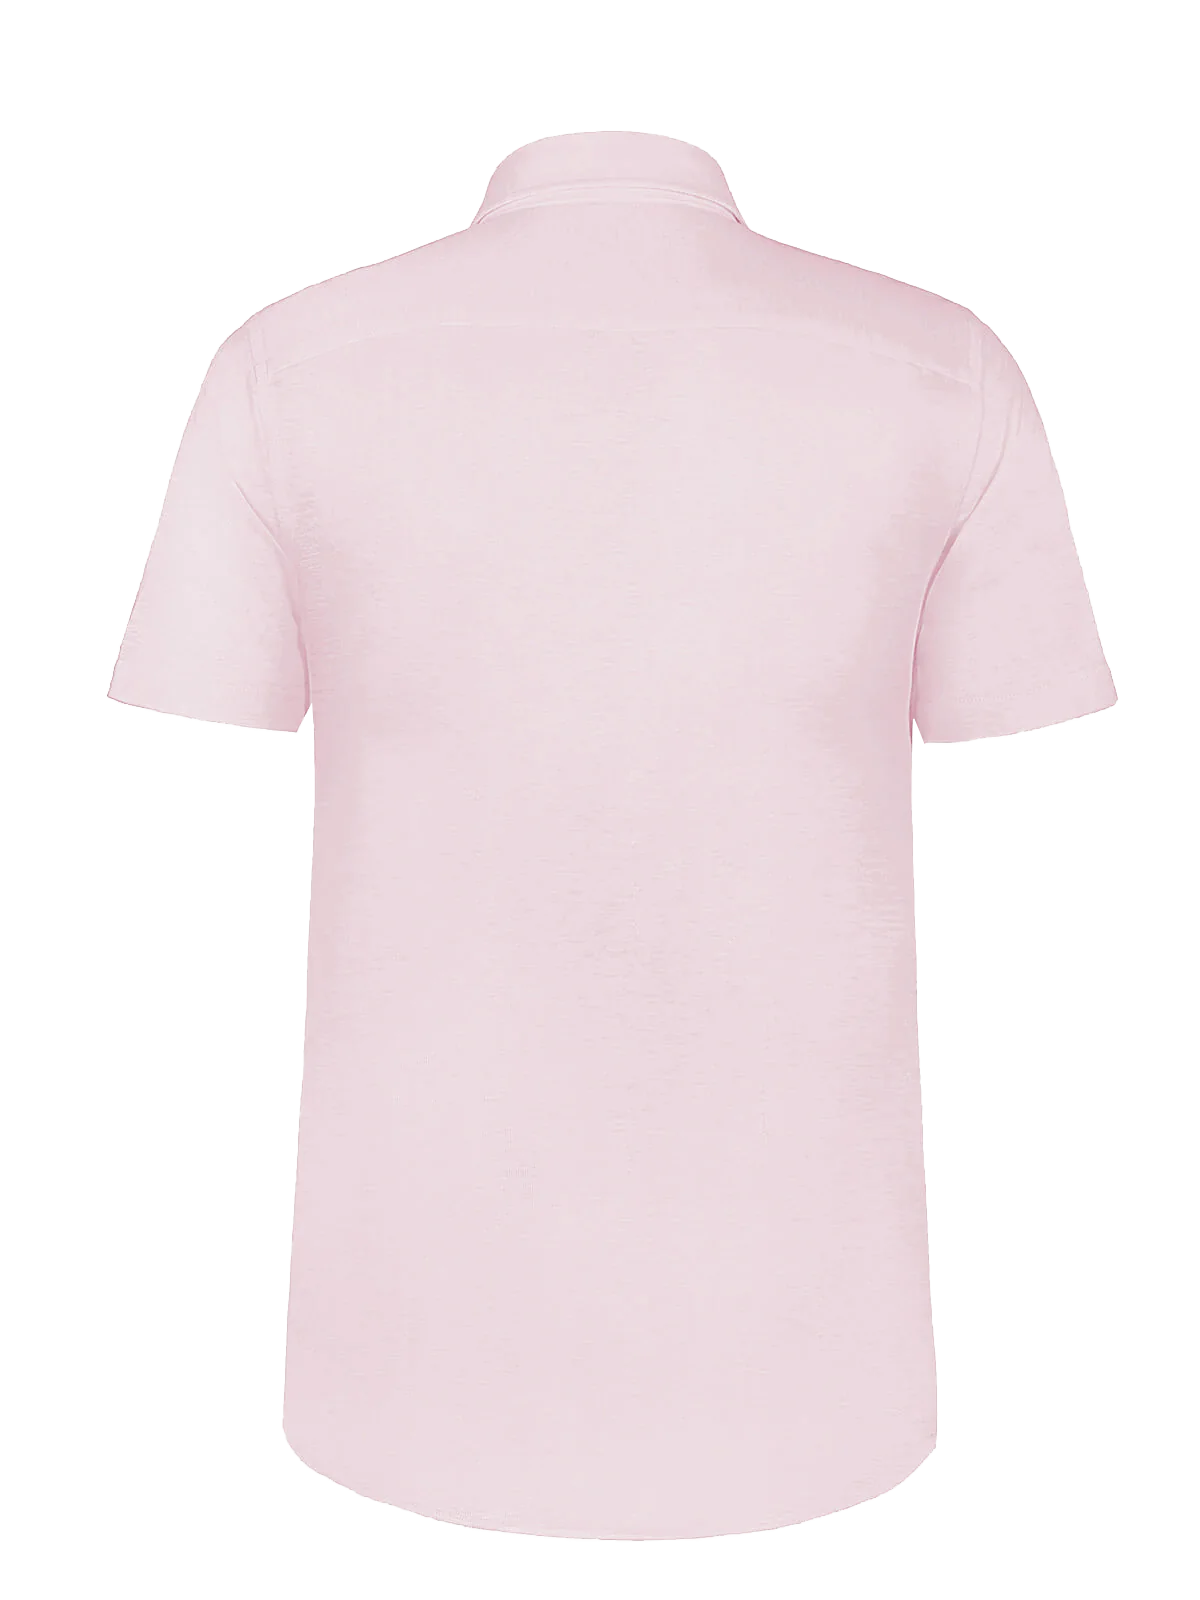 Camicia Short Sleeve 100% Capri pink linen shirt back